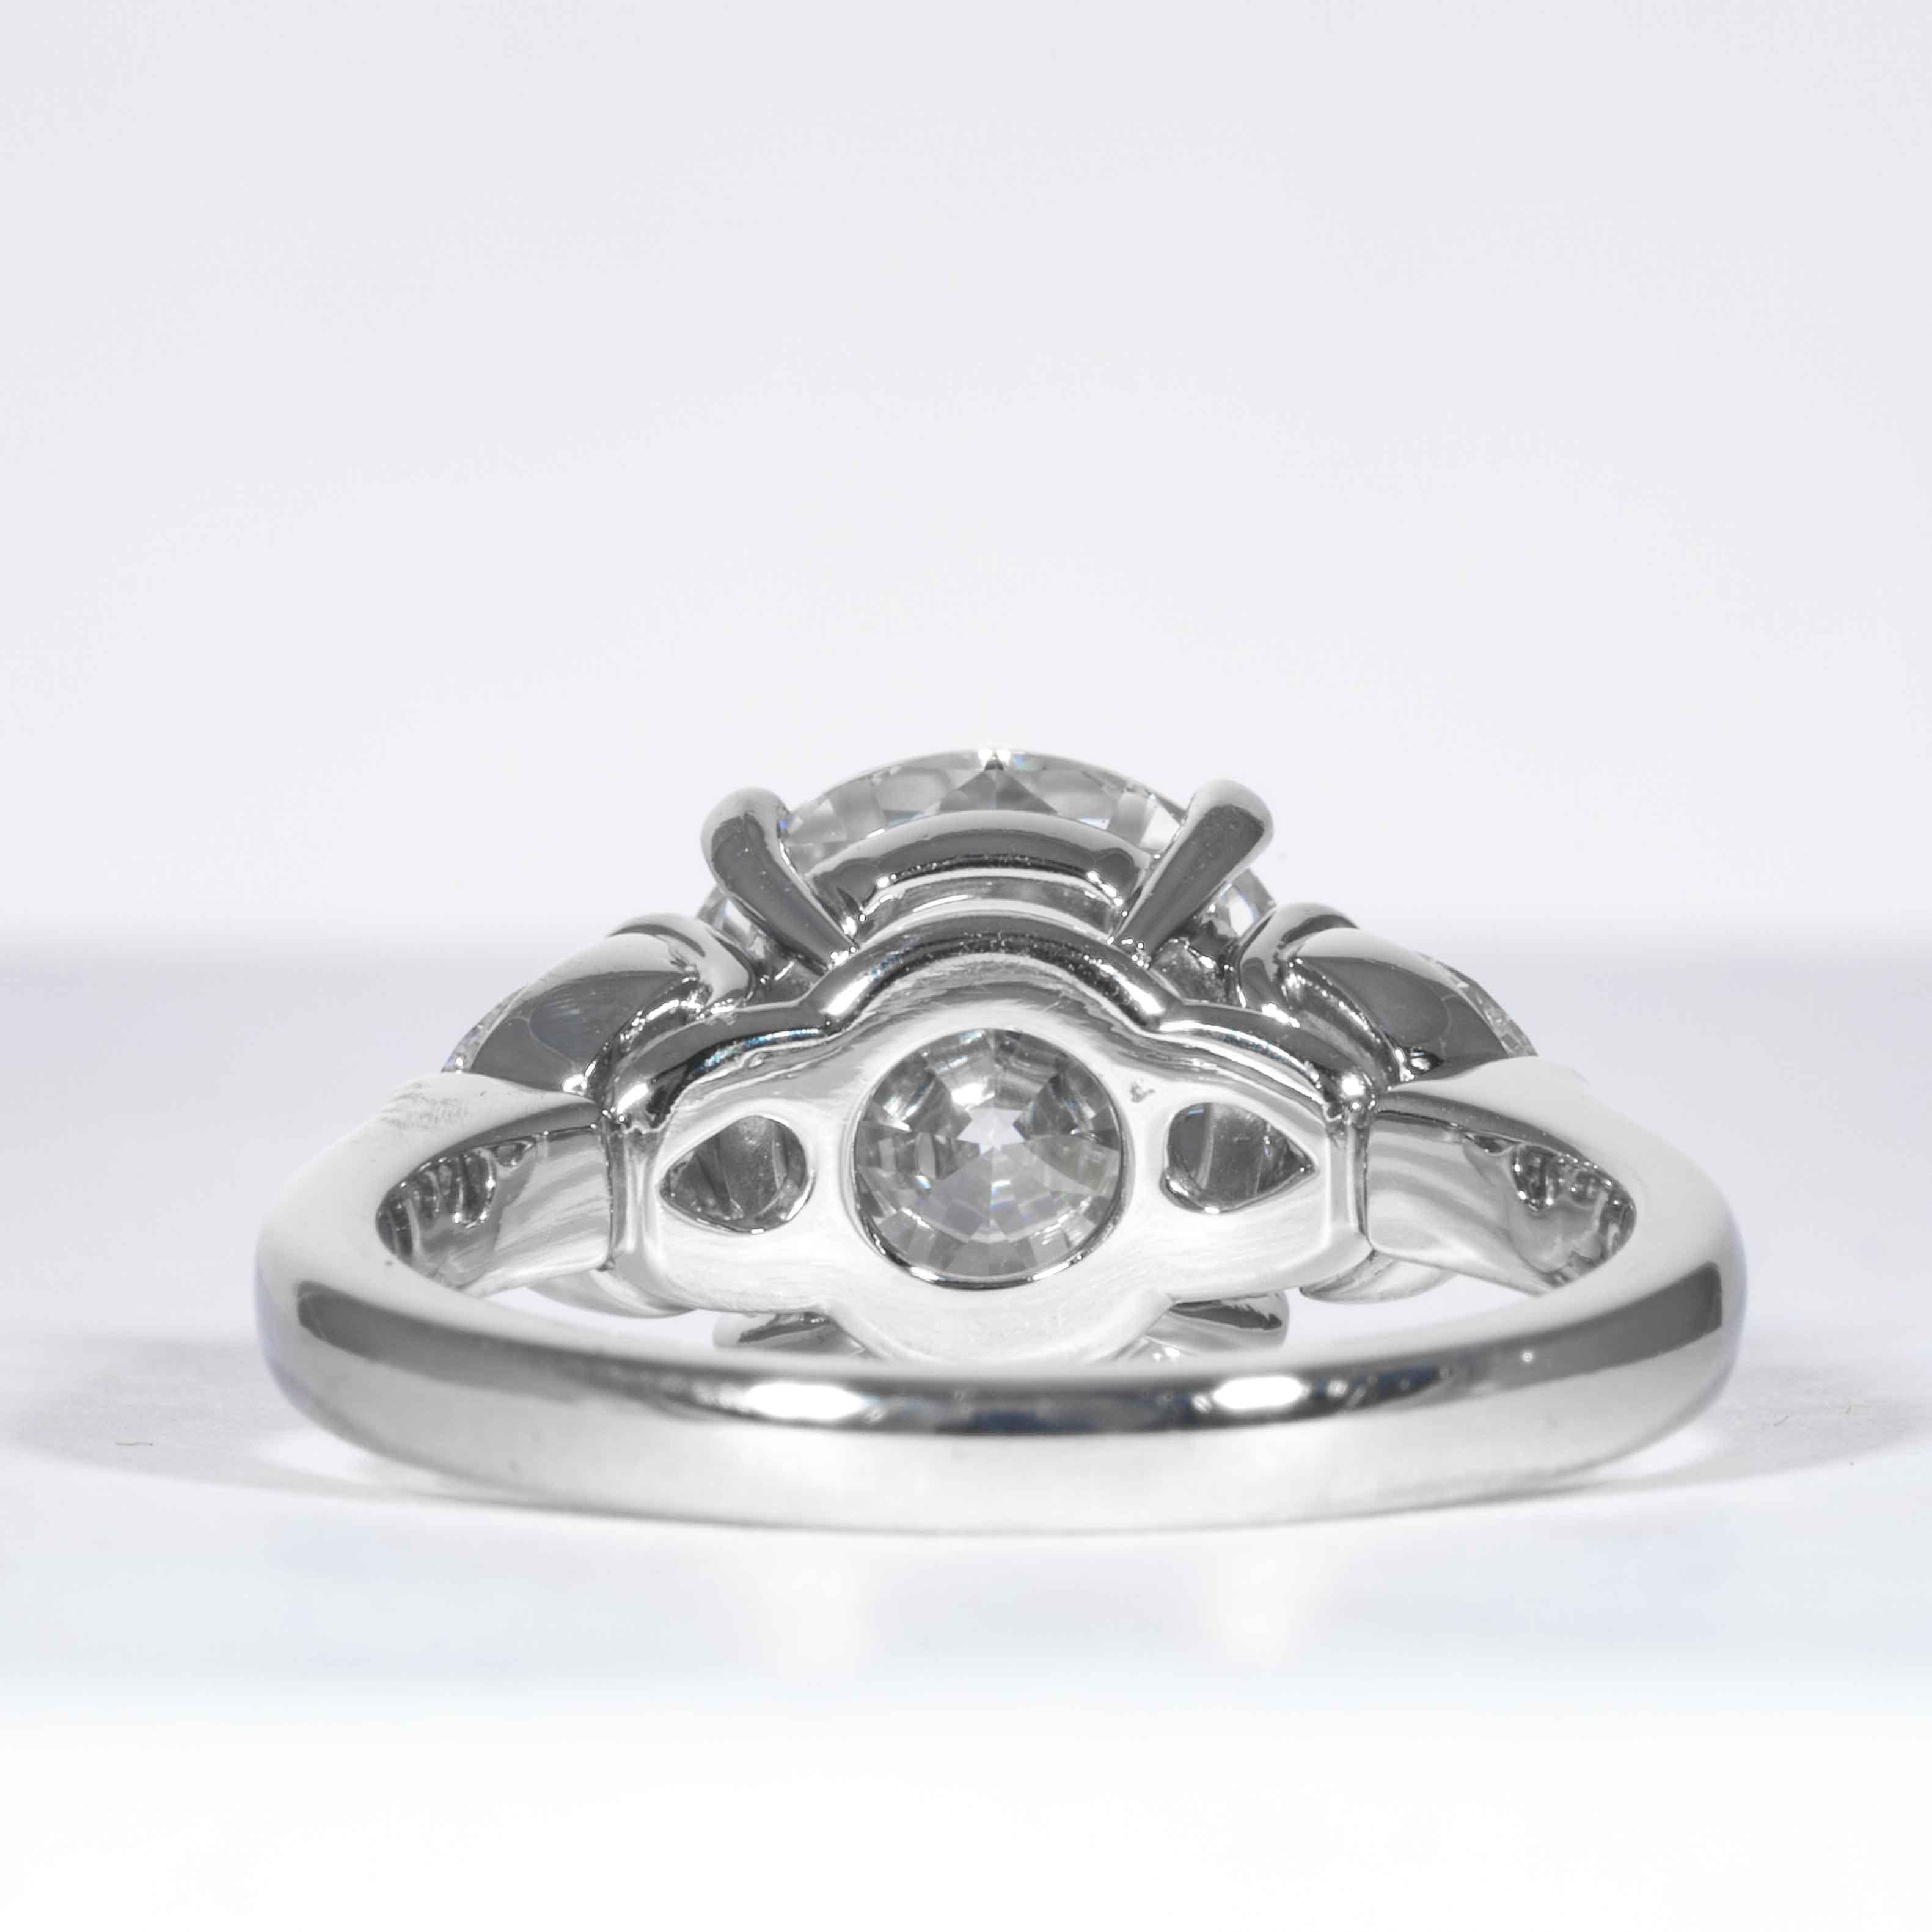 Shreve, Crump & Low GIA Certified 3.23 Carat E VVS2 Round Brilliant Diamond Ring For Sale 1